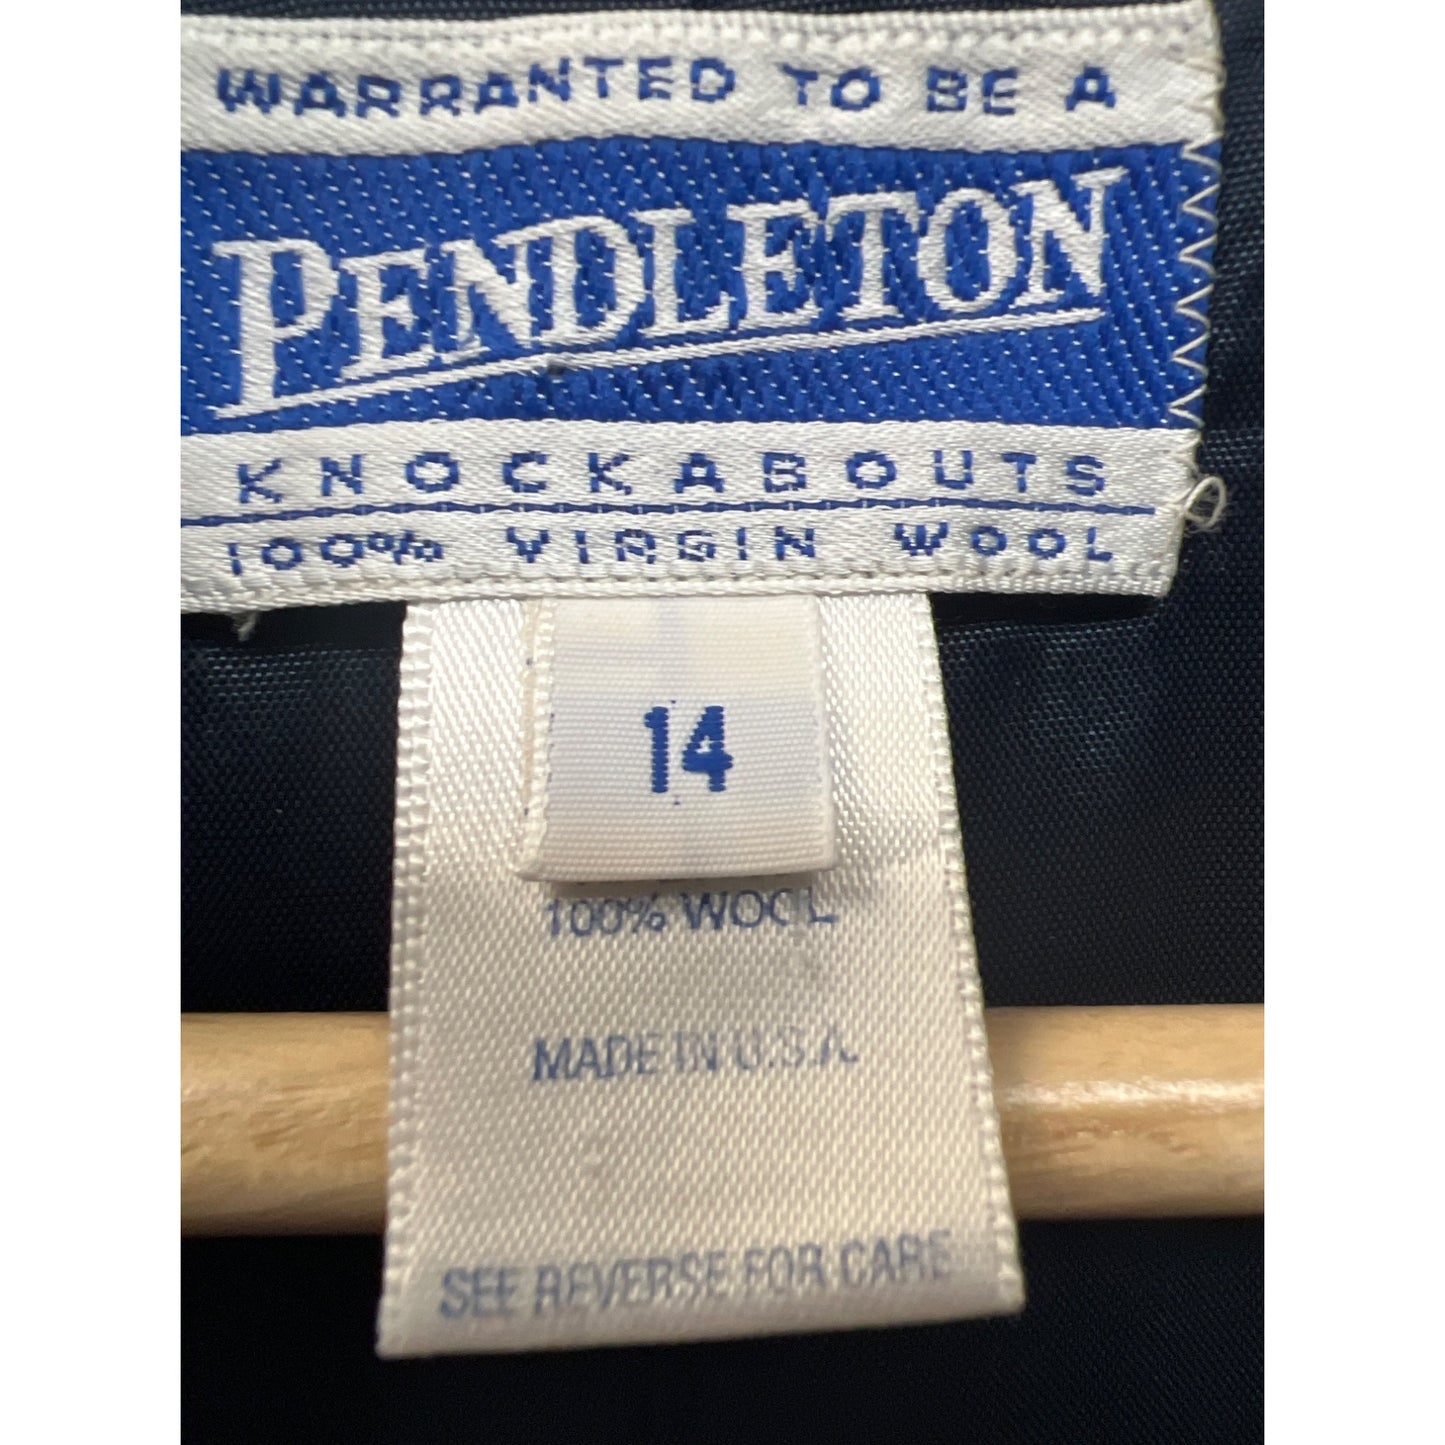 Pendleton Knockabouts Vintage Wool Full Zip Jacket